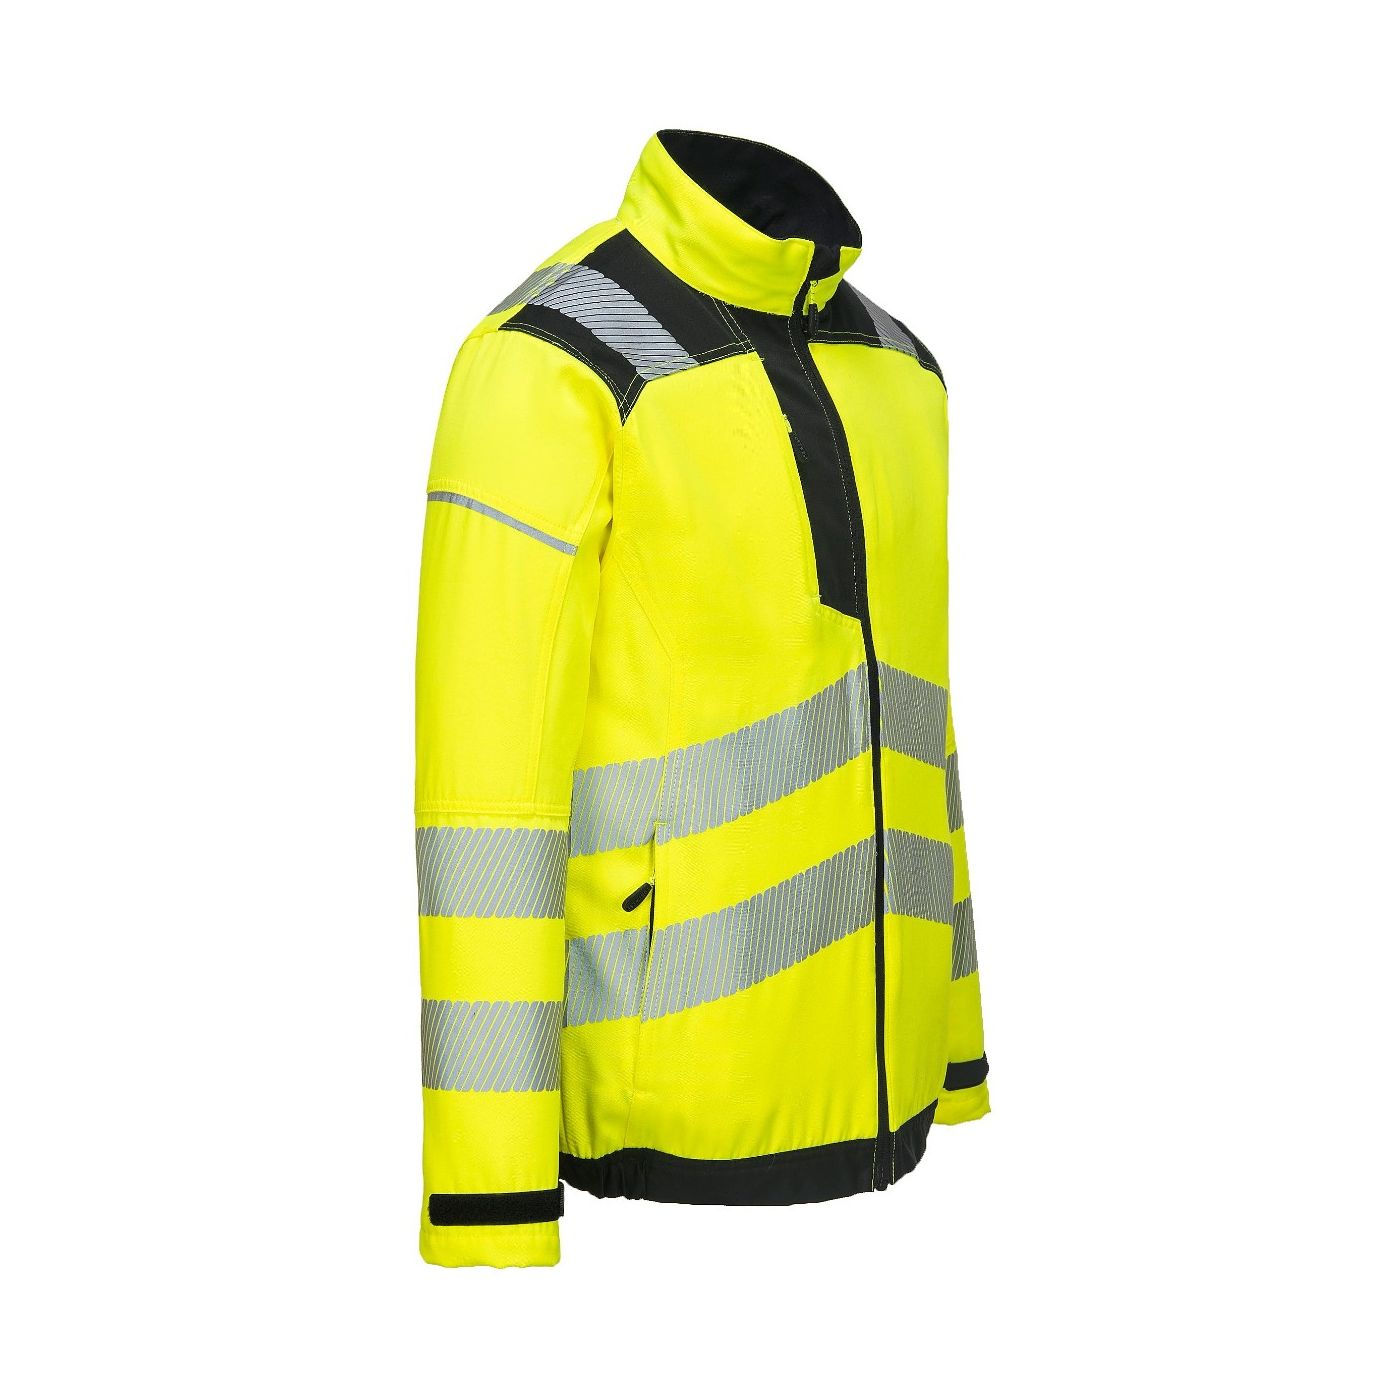 Portwest T500 PW3 Hi-Vis Work Jacket - Yellow/Black